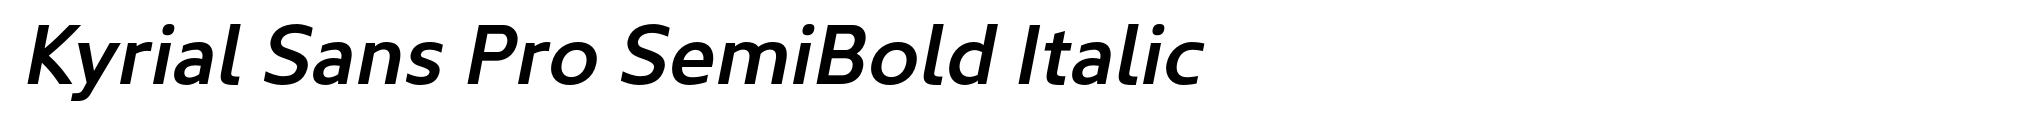 Kyrial Sans Pro SemiBold Italic image